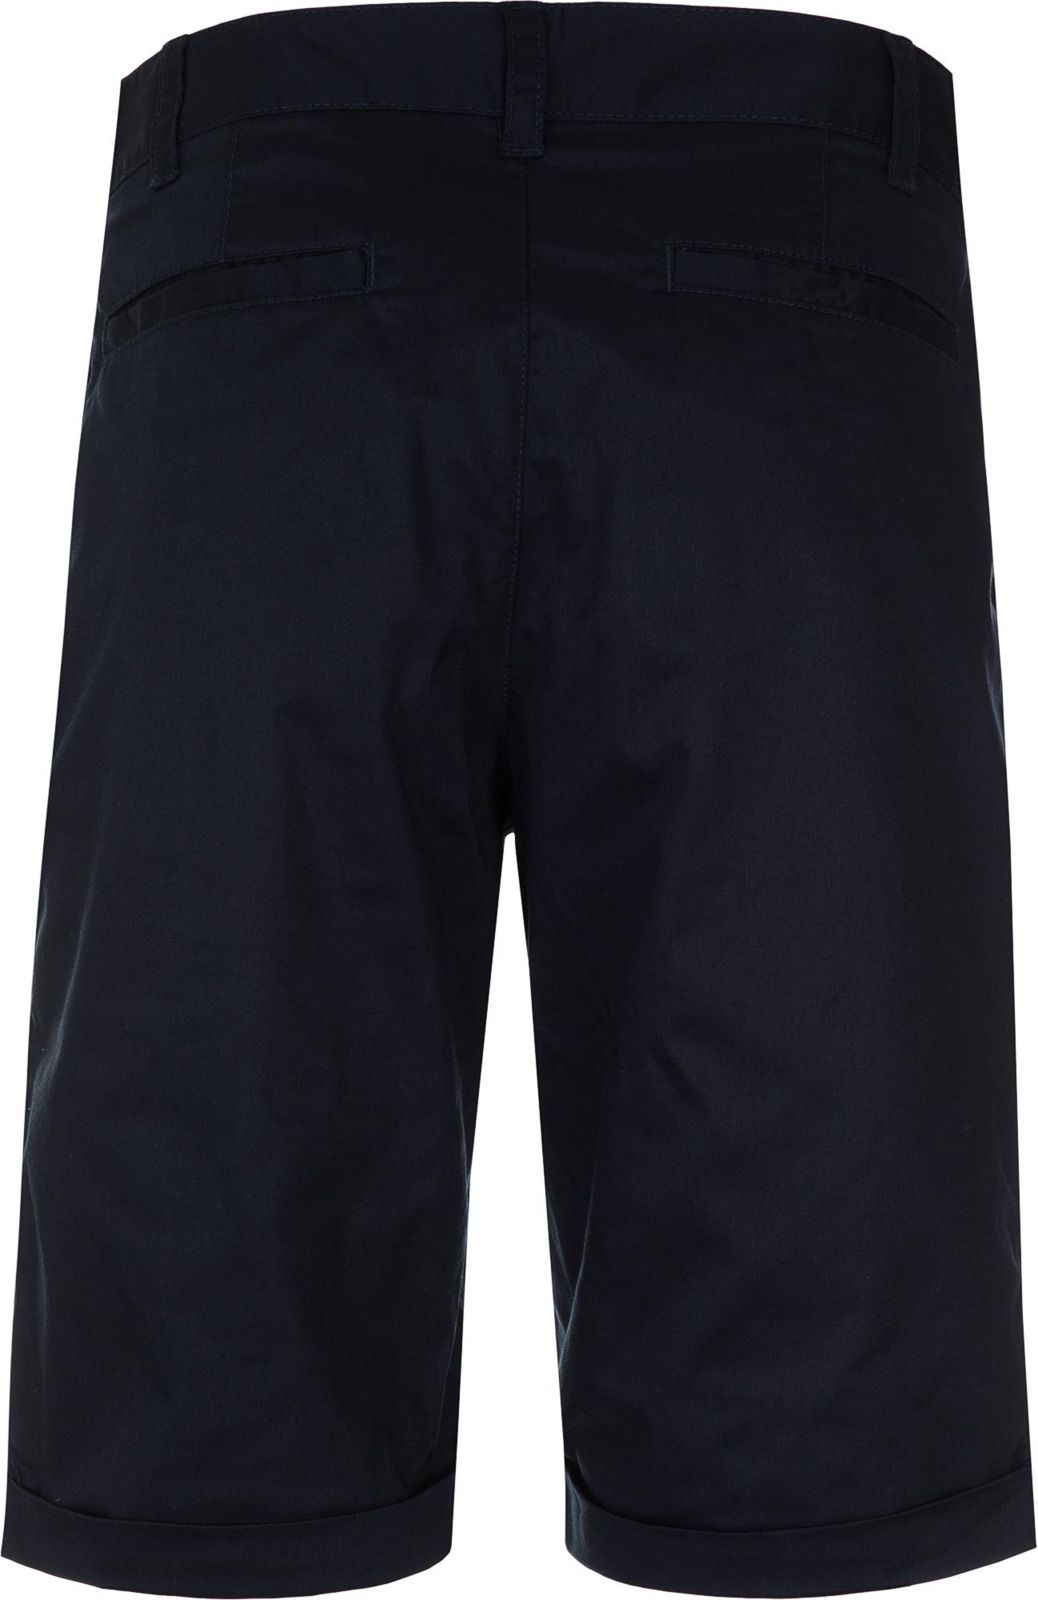   Fila Men's Shorts, : -. 100086-Z4.  M (48)